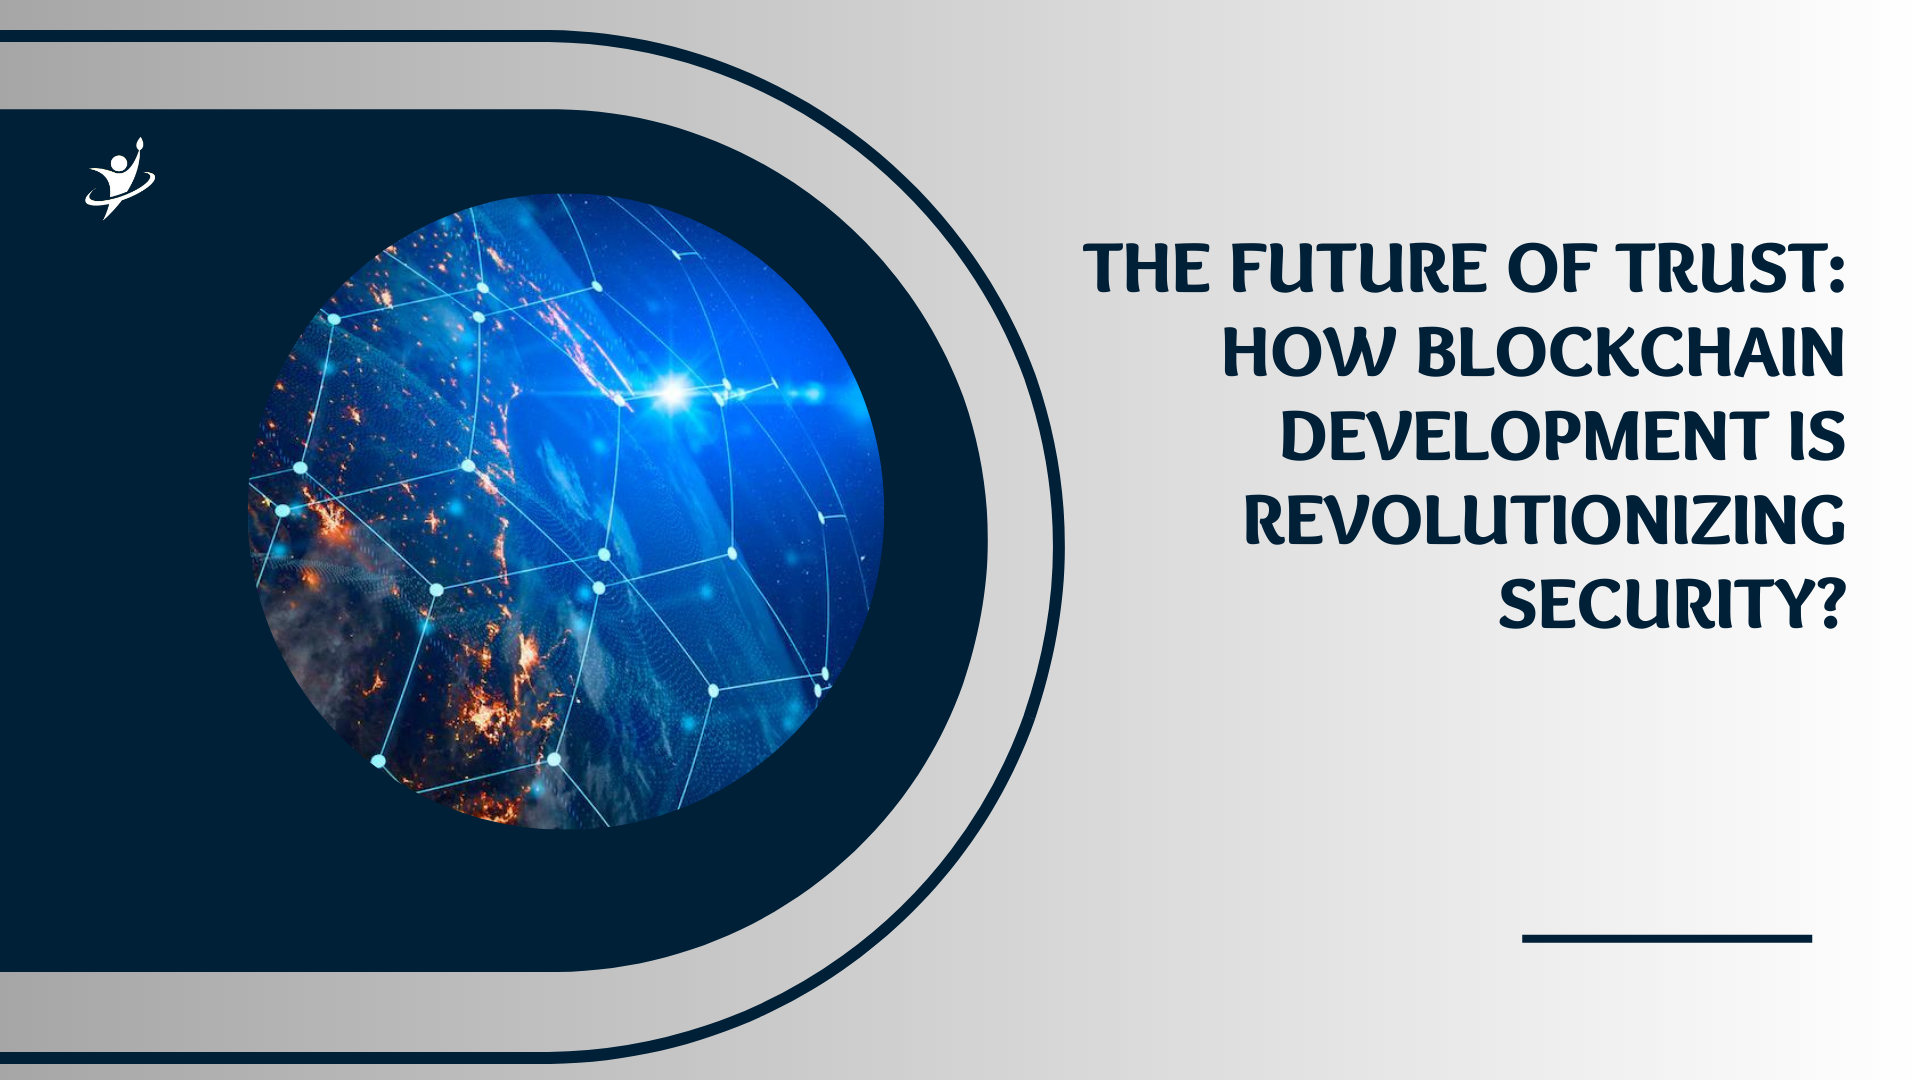 Blockchain Development is Revolutionizing Security.